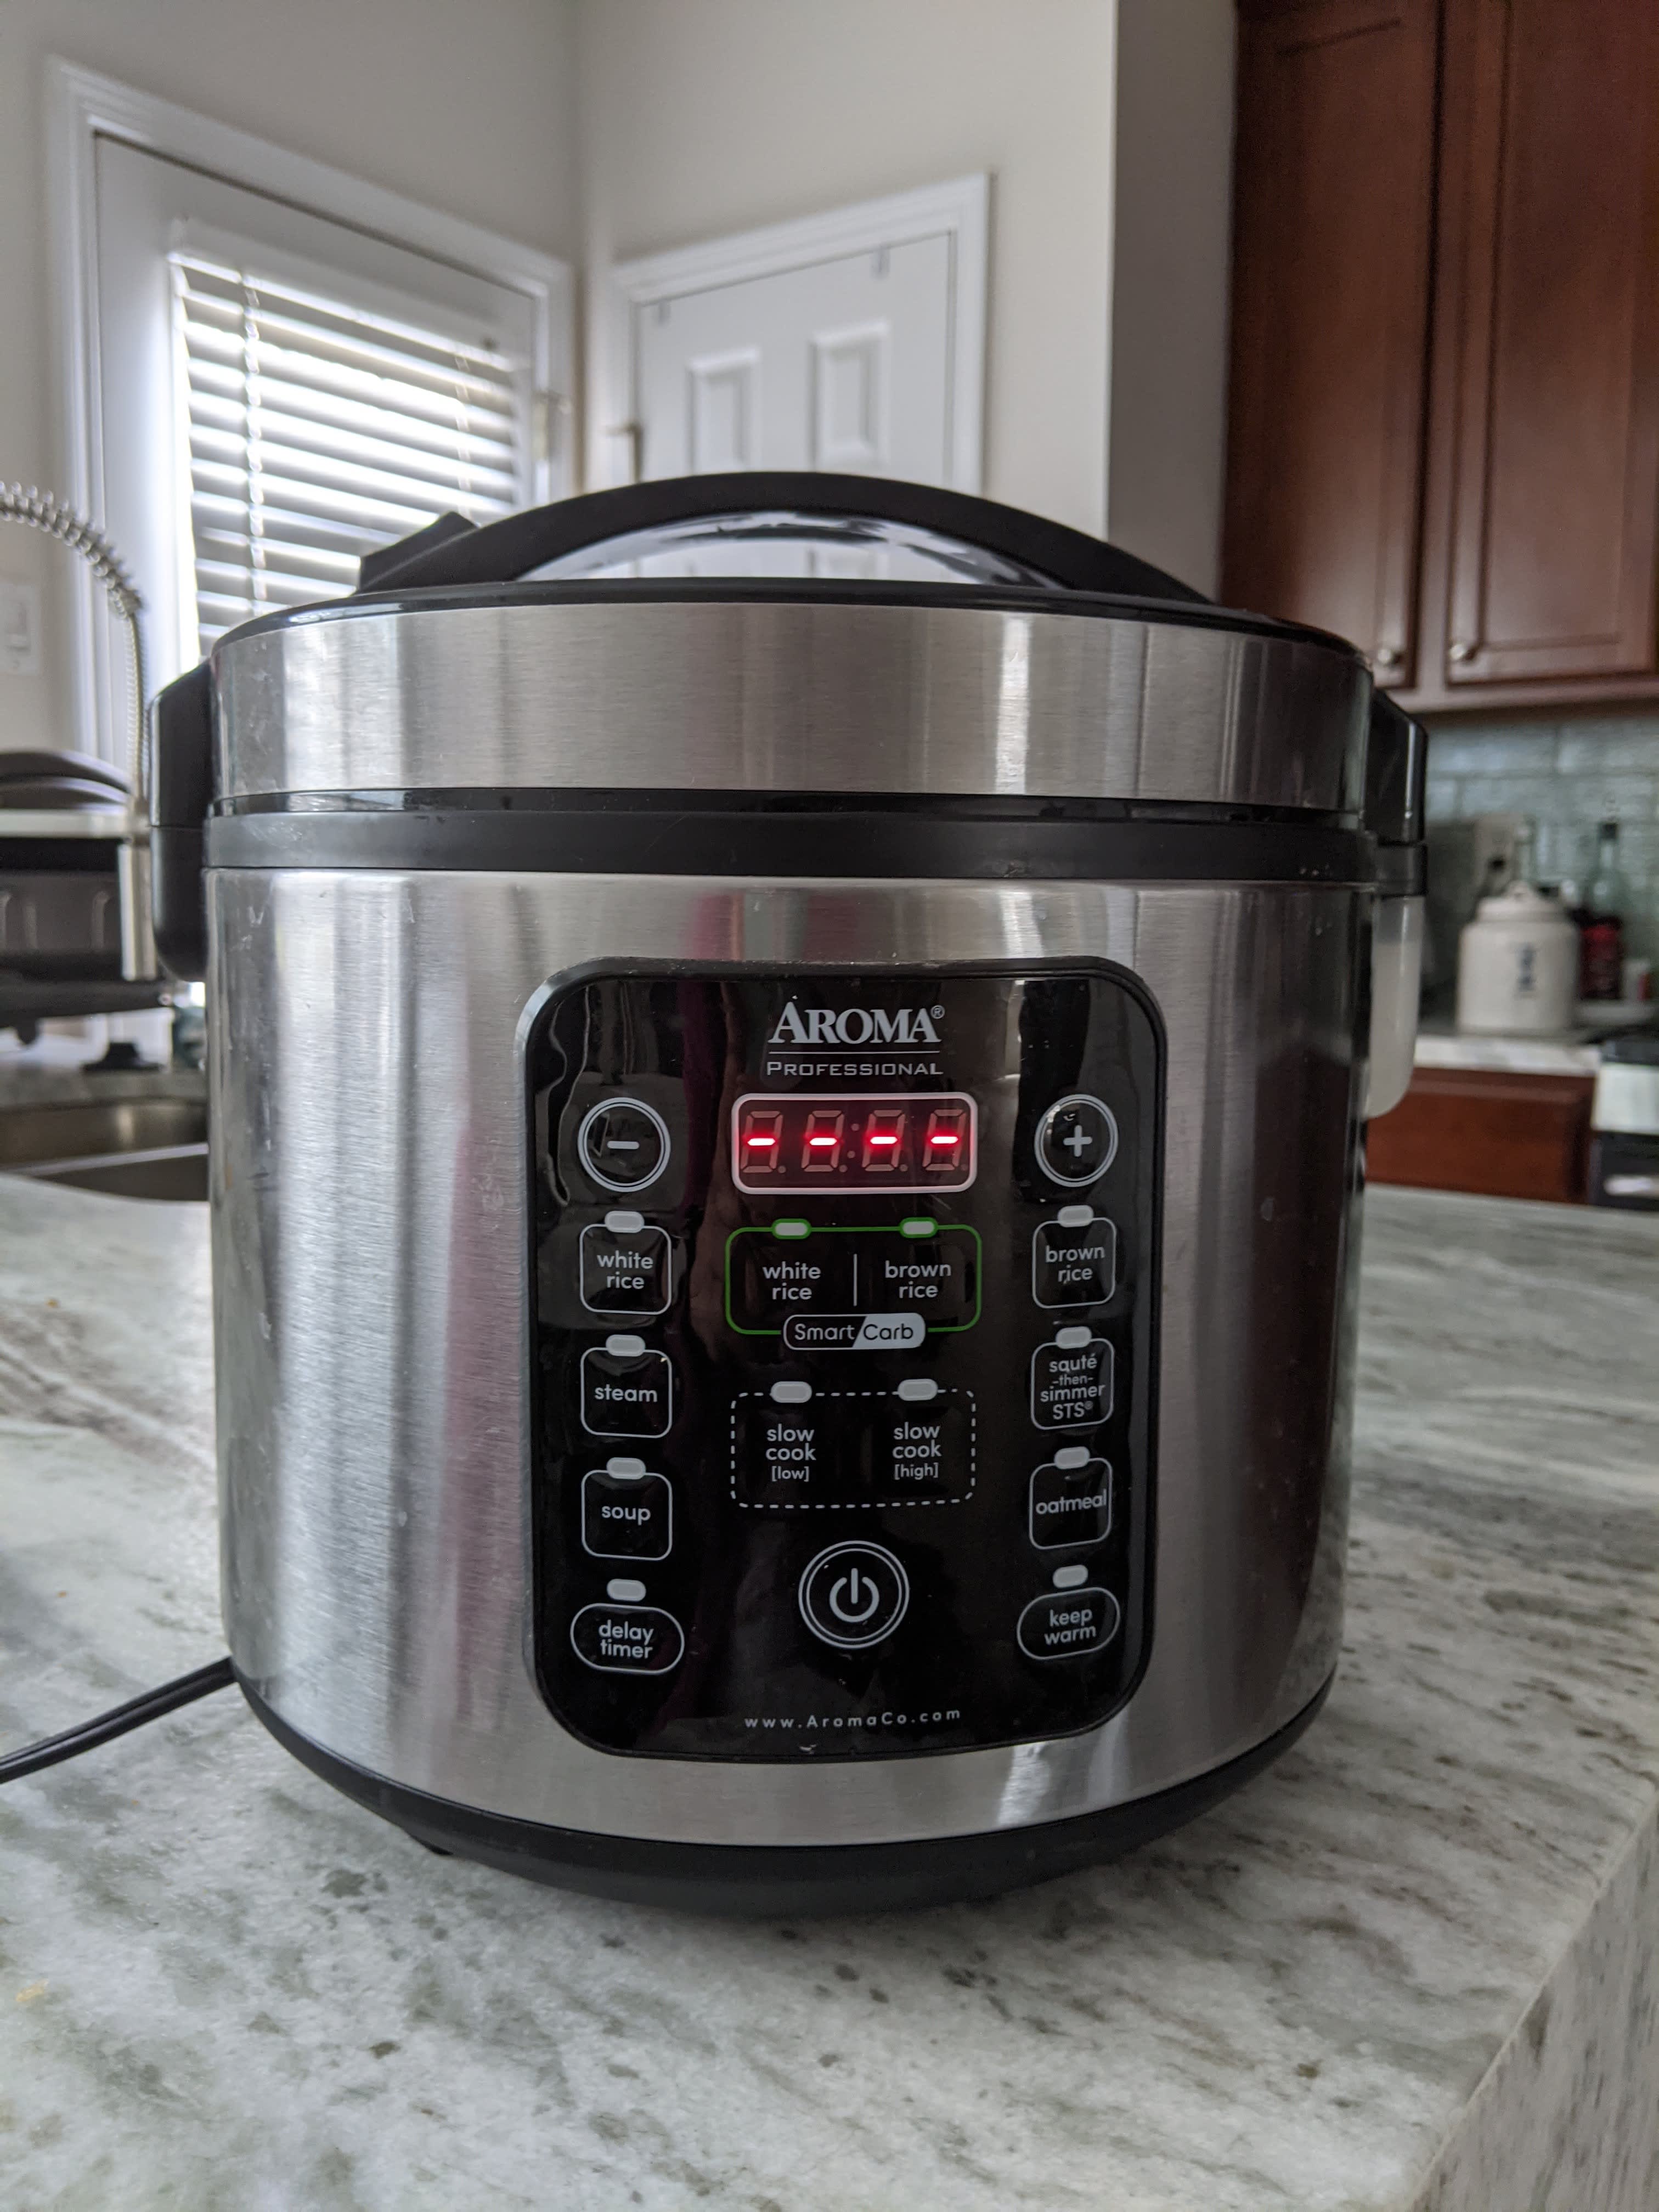 Aroma Professional Plus Rice Cooker, Model#: ARC-5000 – CostcoChaser